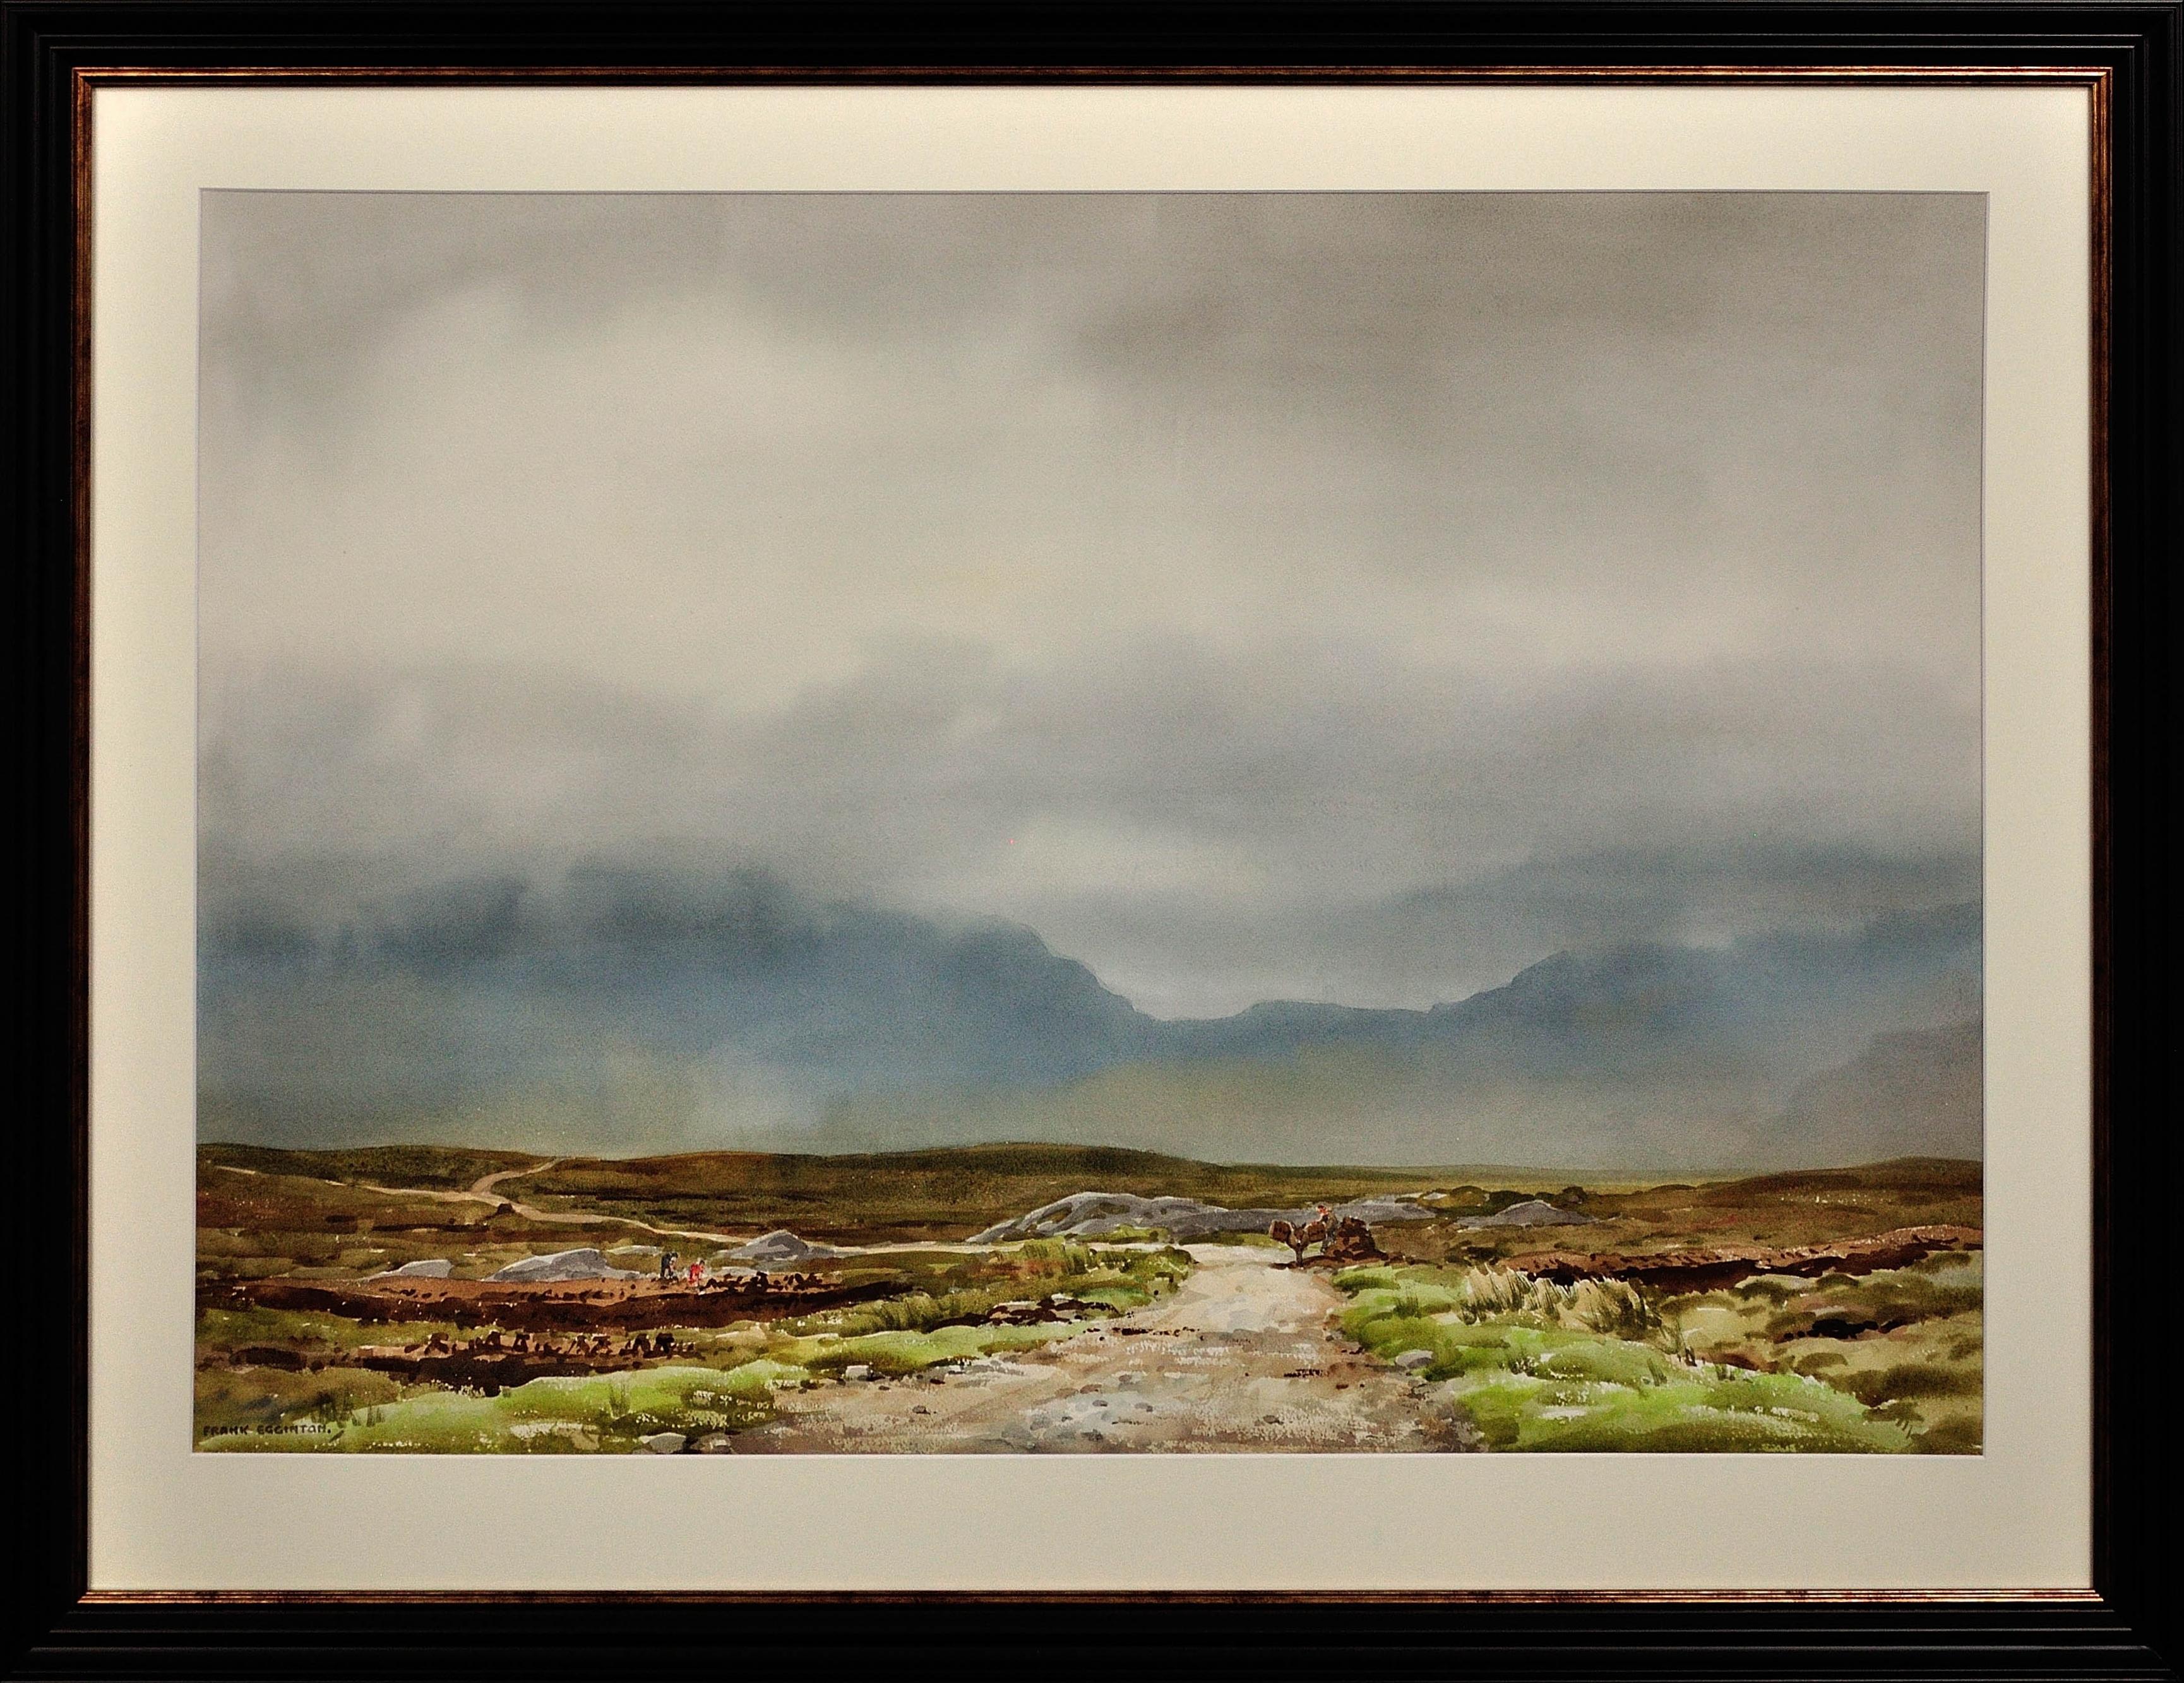 Frank Egginton Landscape Art - The Maamturk Mountains from Recess, Connemara, Ireland. Framed Irish Watercolor.